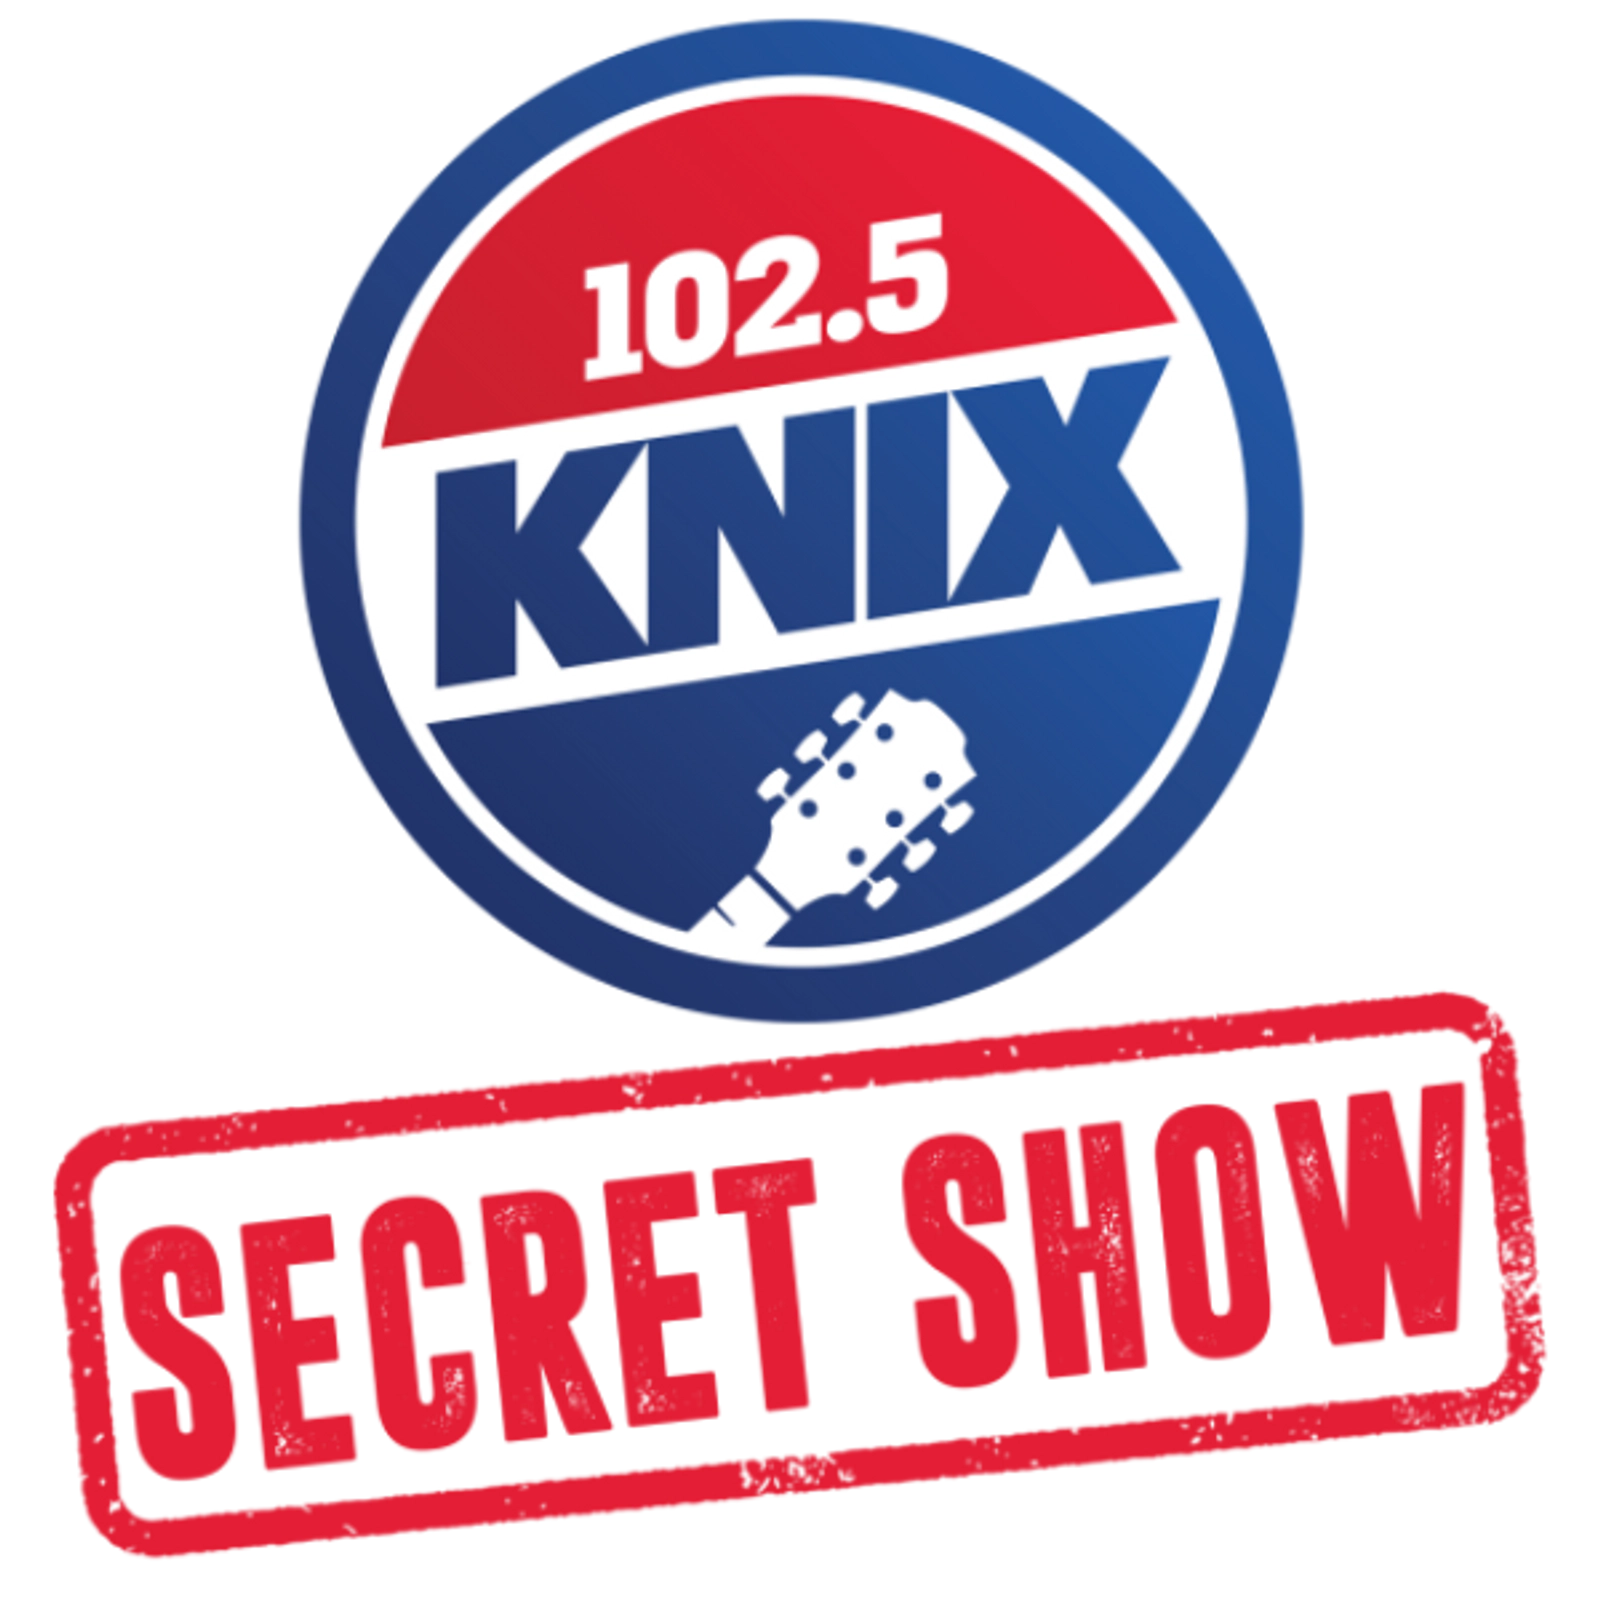 KNIX Phoenix Arizona 102 FM Radio Station Vintage Bumper Sticker Decal